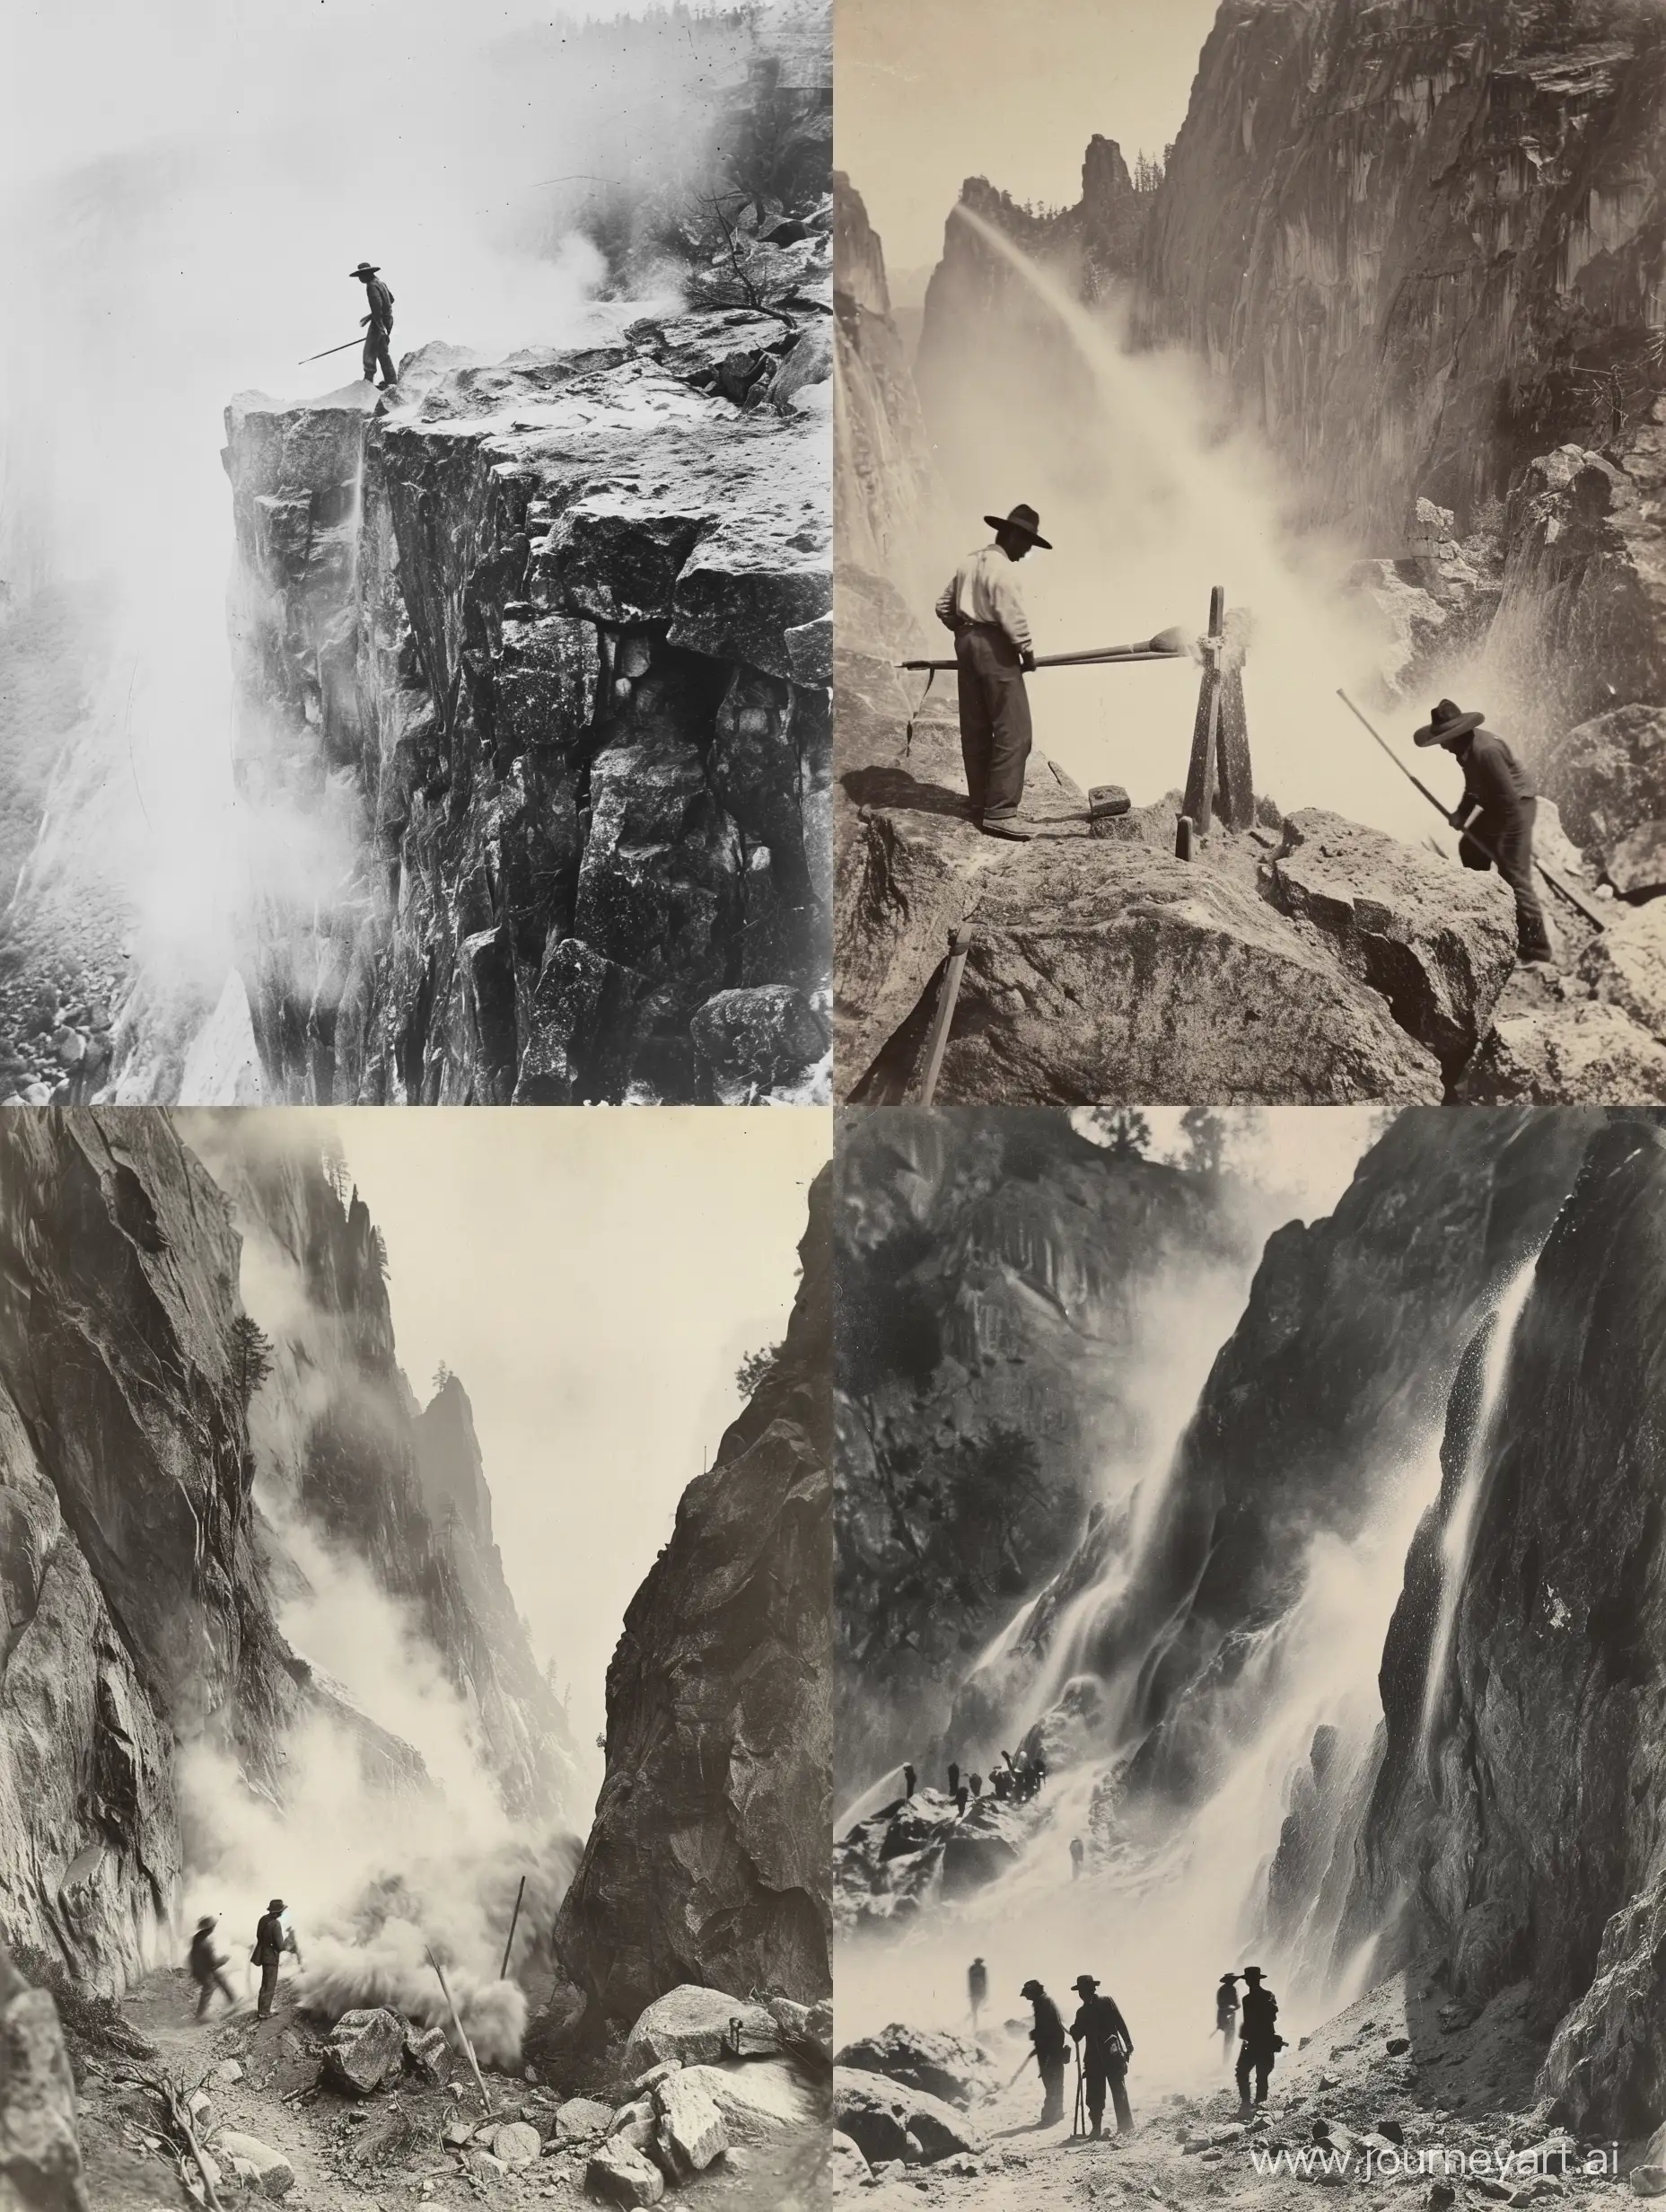 Chinese-Worker-Blasting-Powder-at-Yosemite-in-Late-1800s